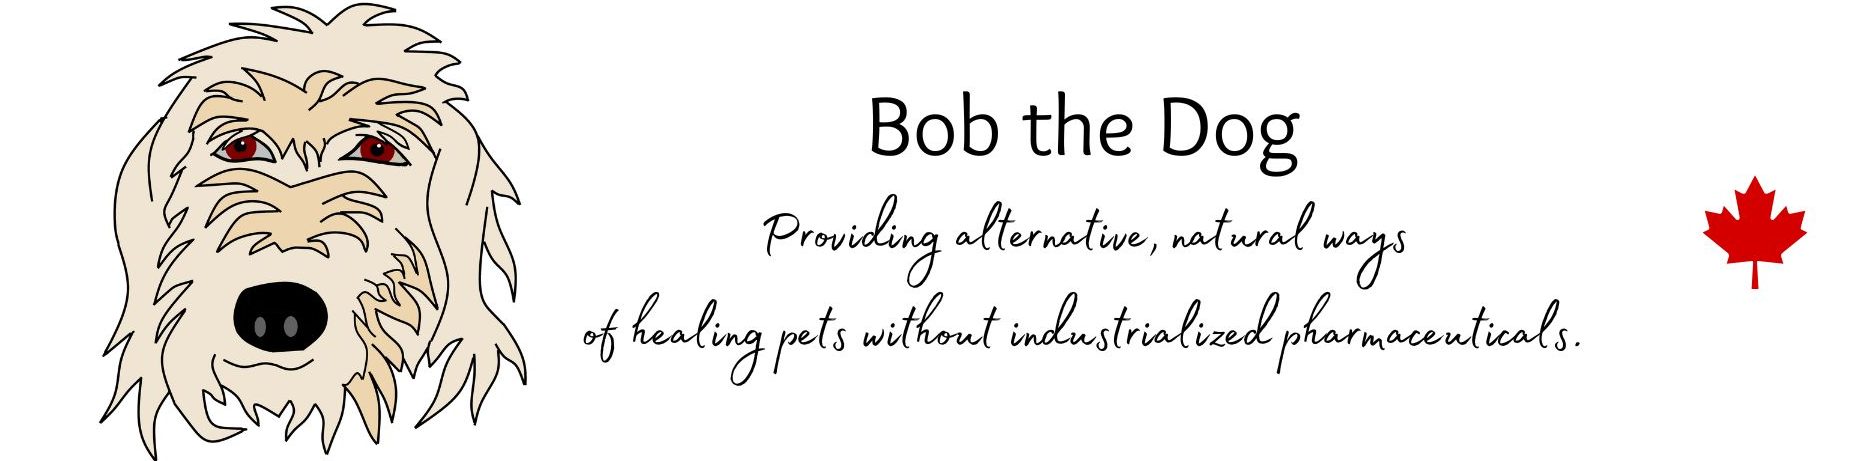 Bob the Dog - Alternative, Natural Ways